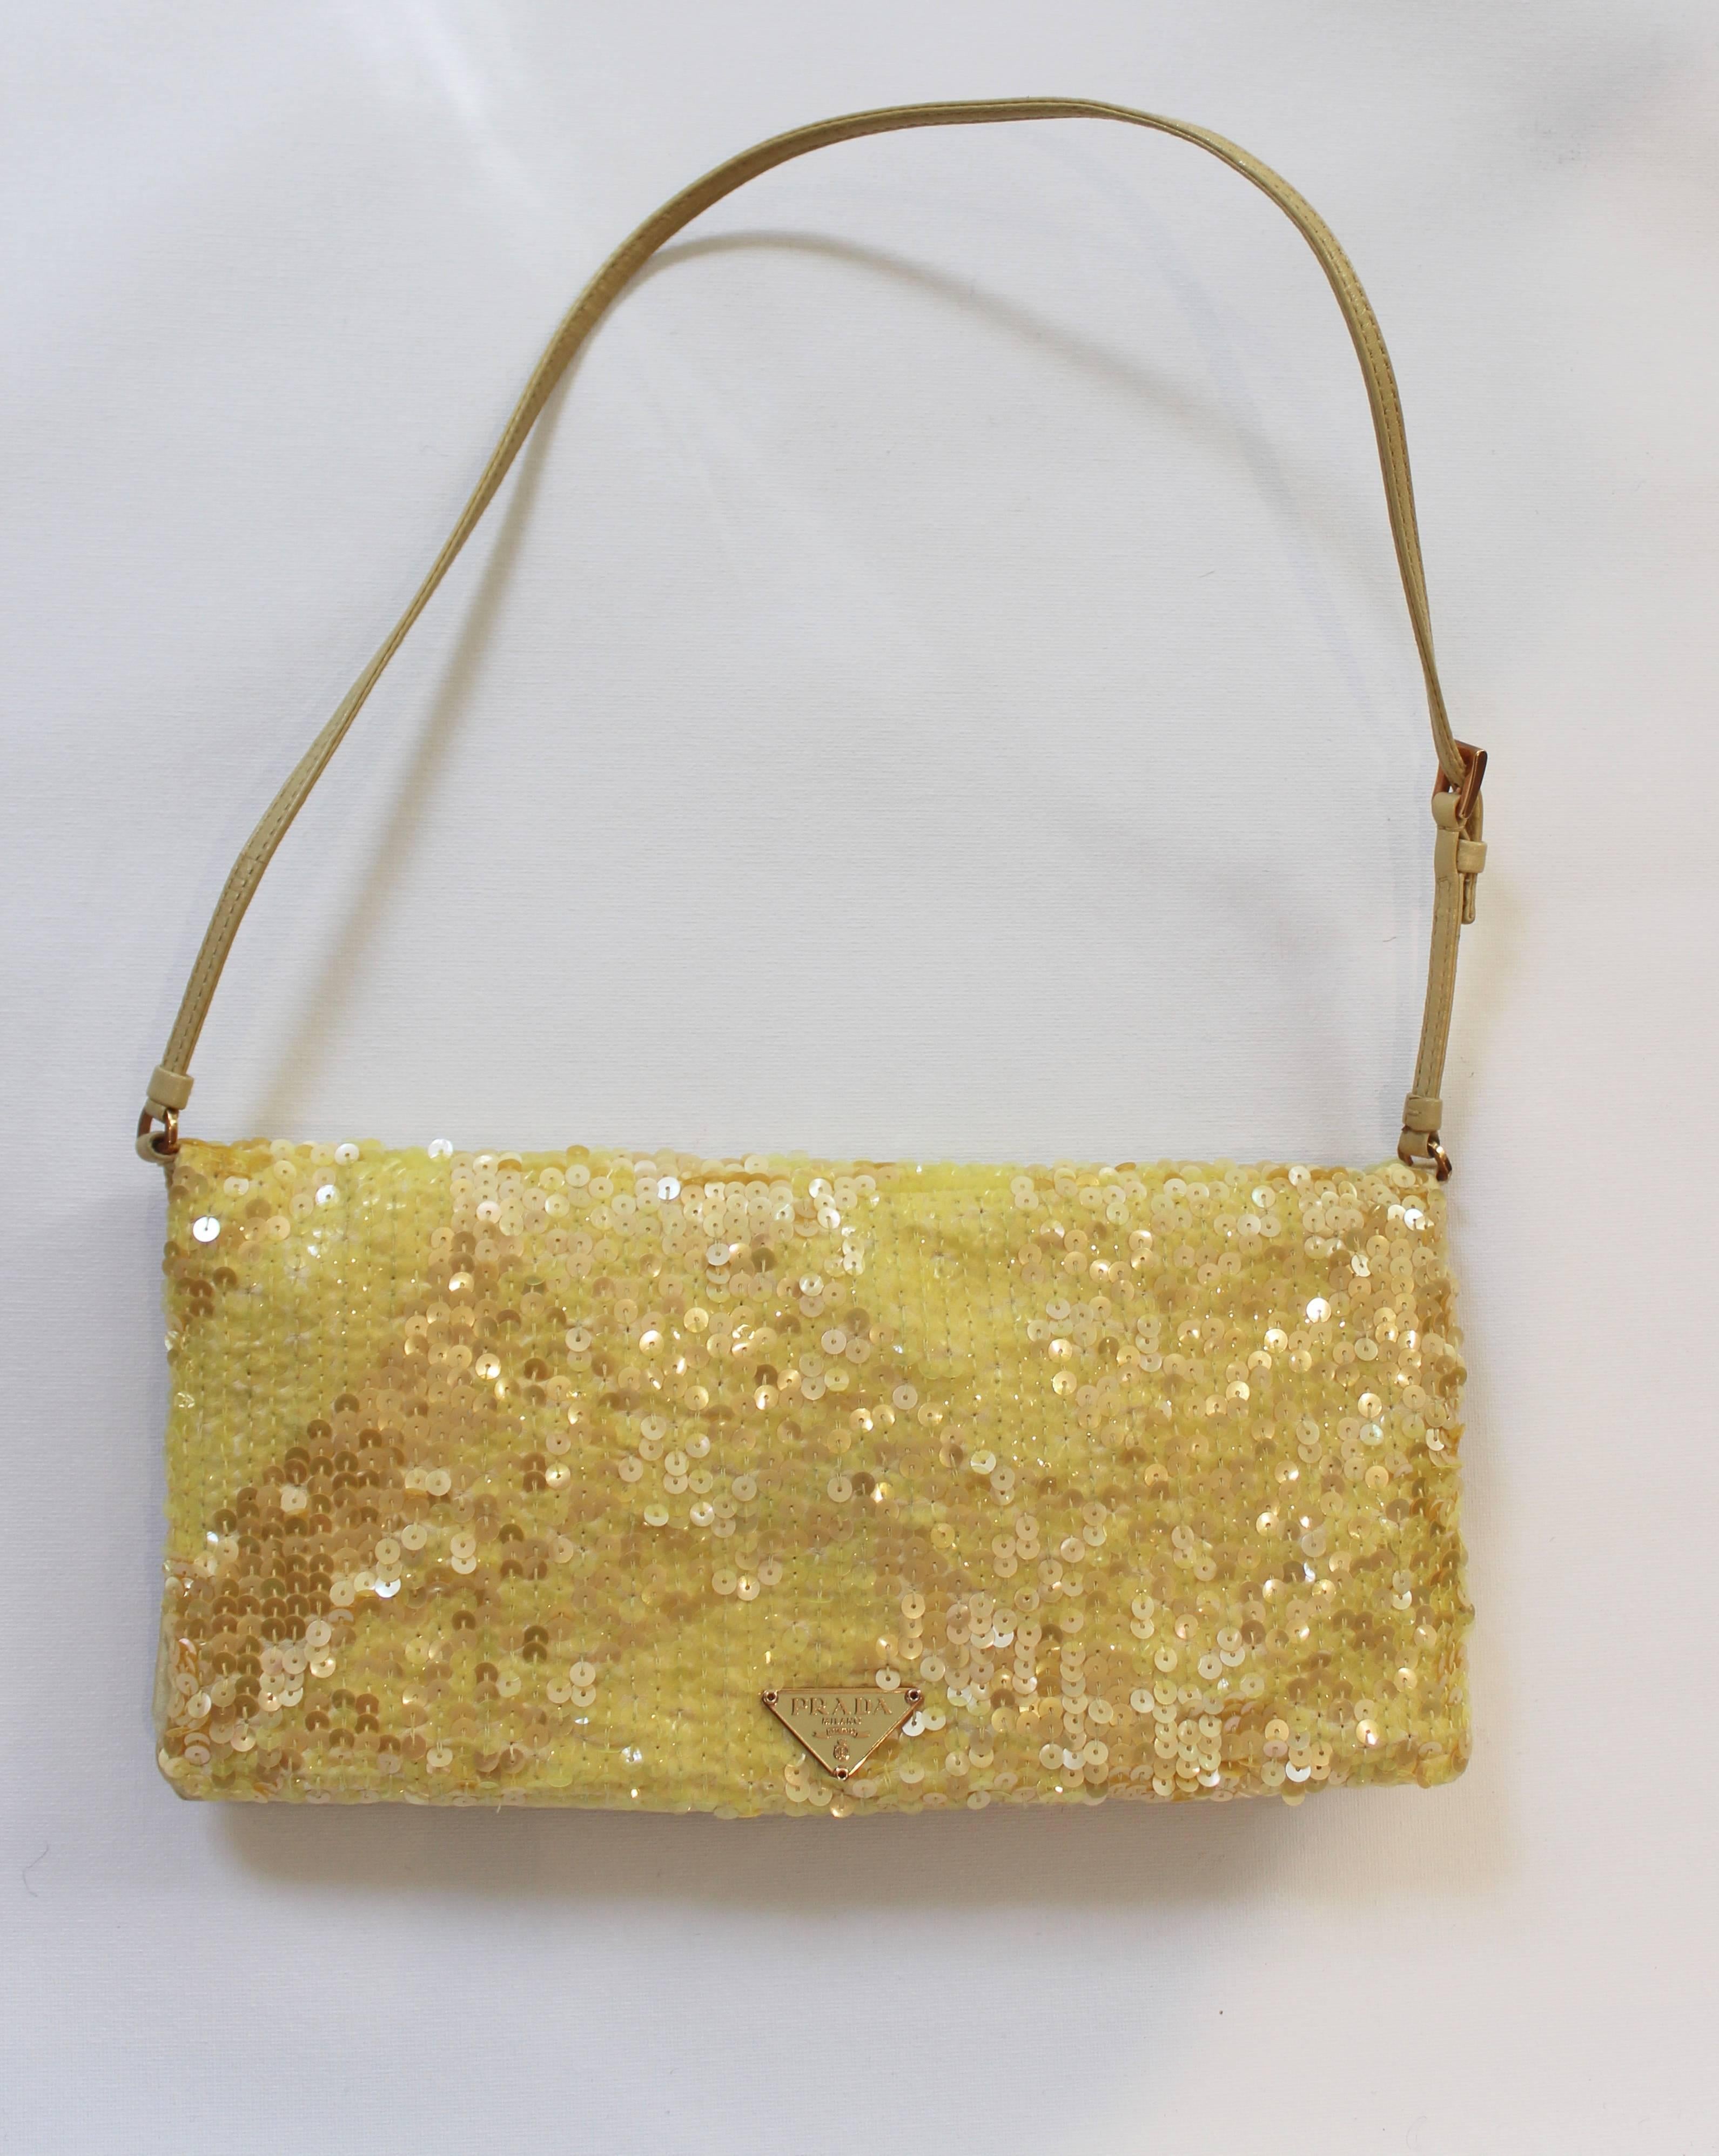 prada yellow sparkly bag